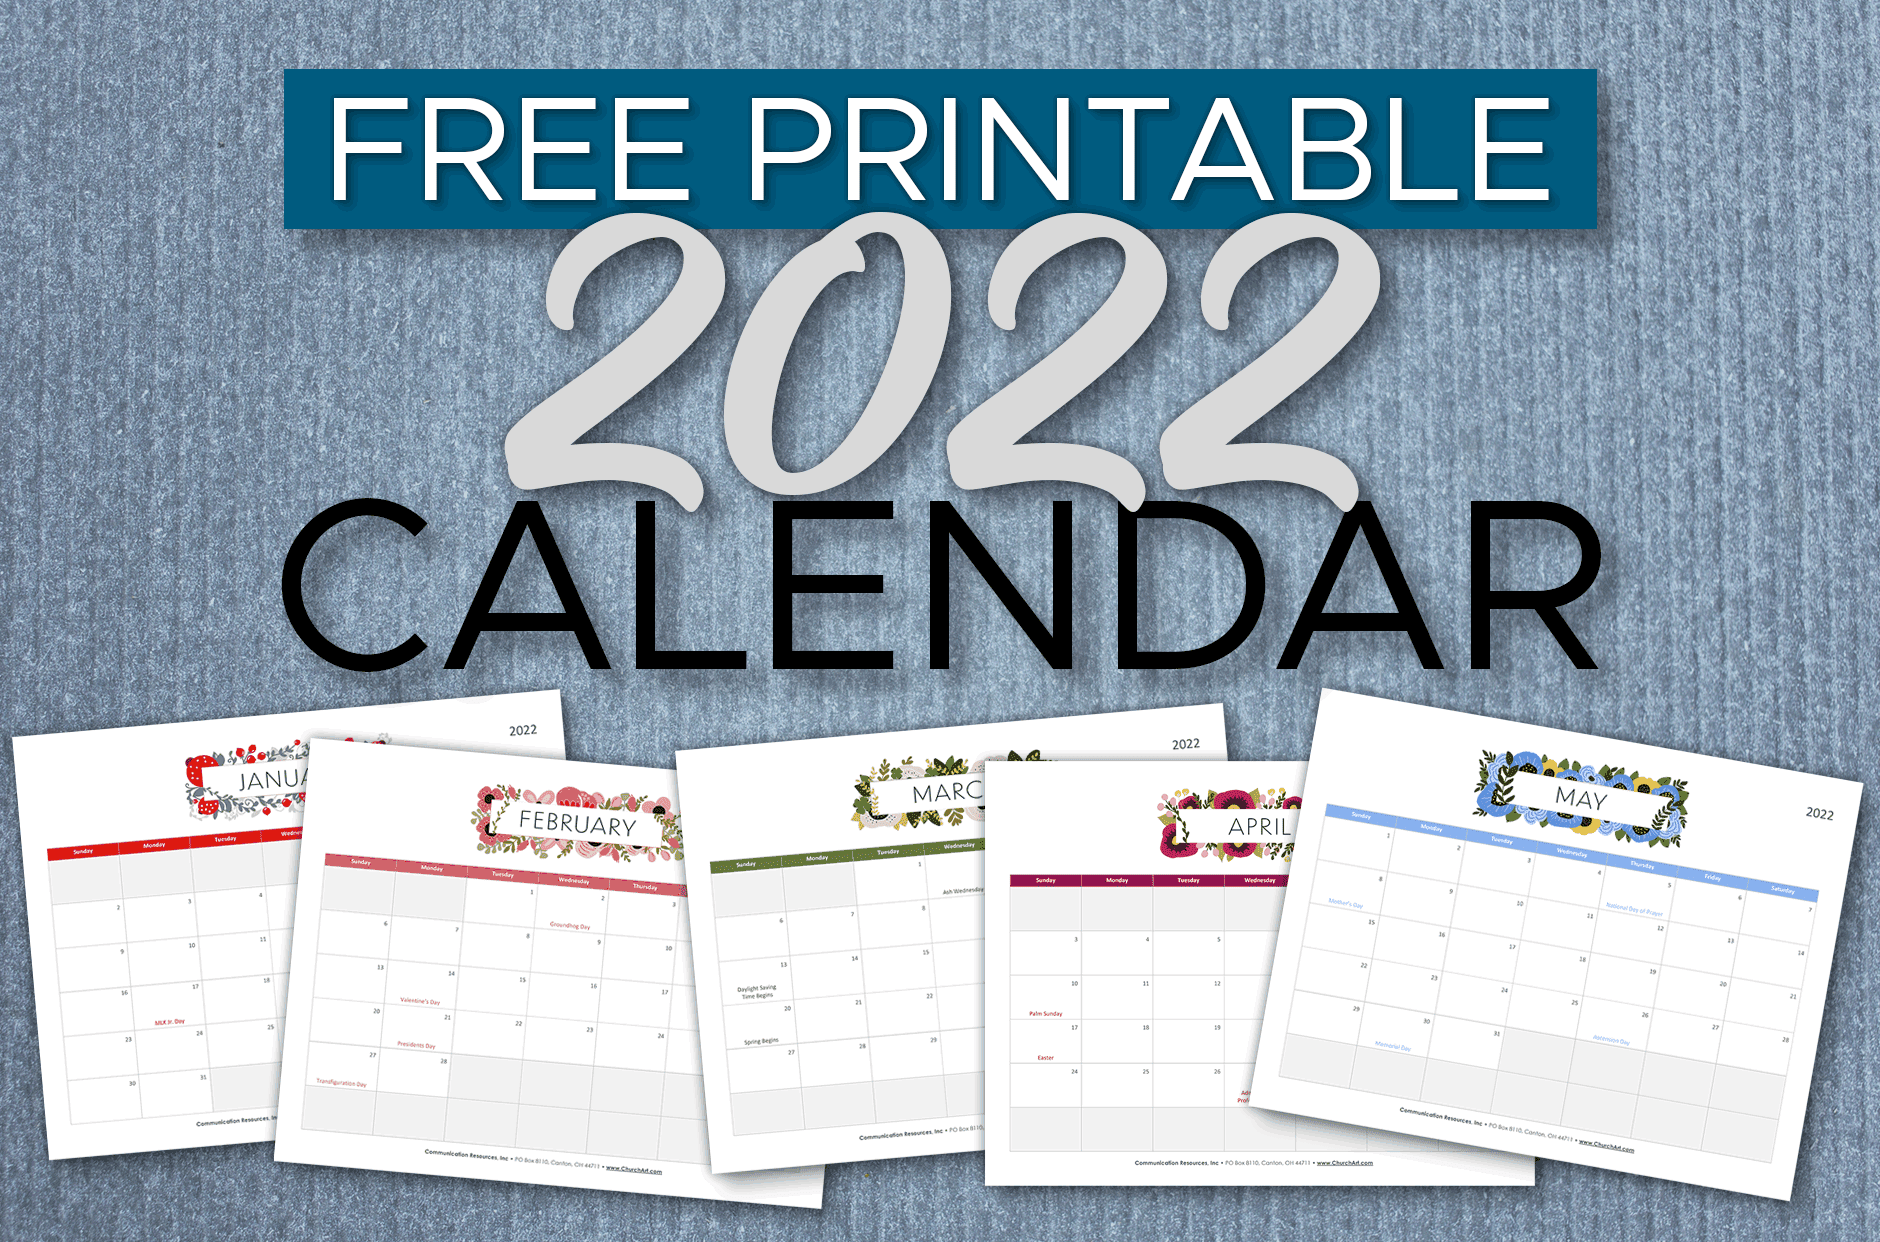 Free 2022 Printable Calendar Free Printable 2022 Church Calendar | Churchart.com Blog